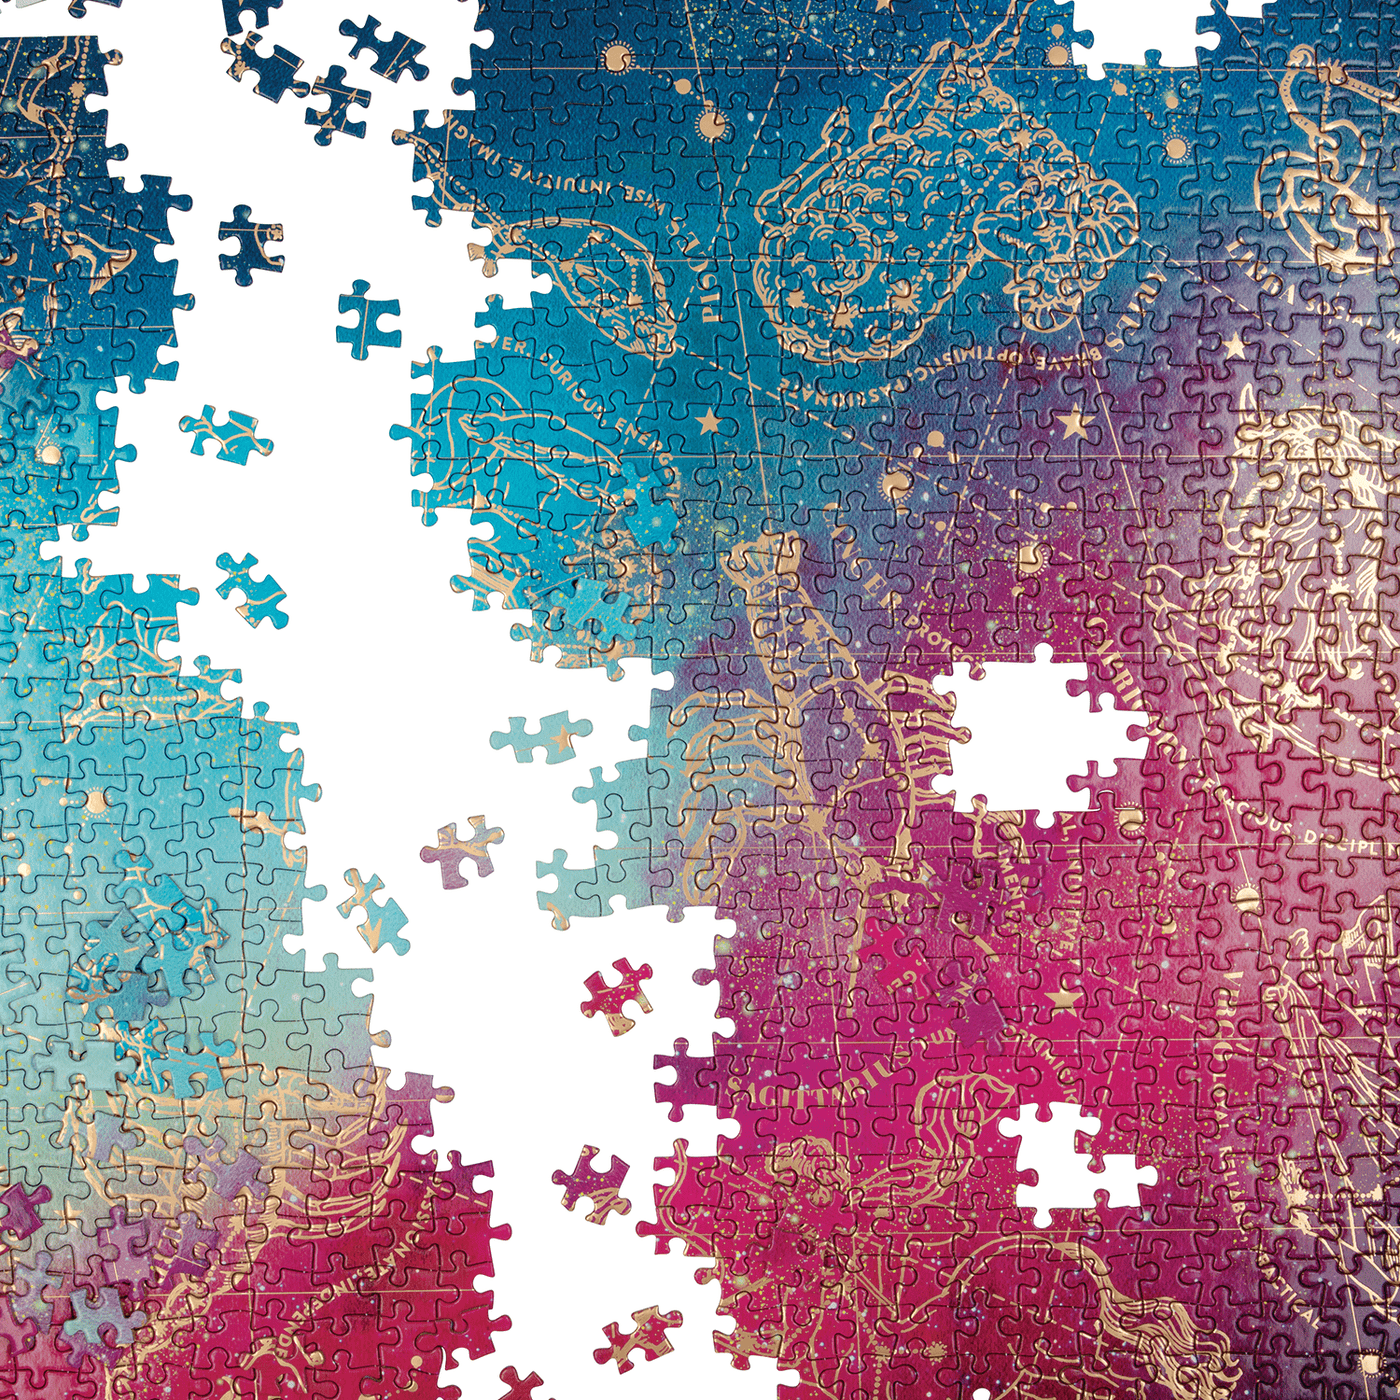 Astrology | 1,000 Piece Jigsaw Puzzle